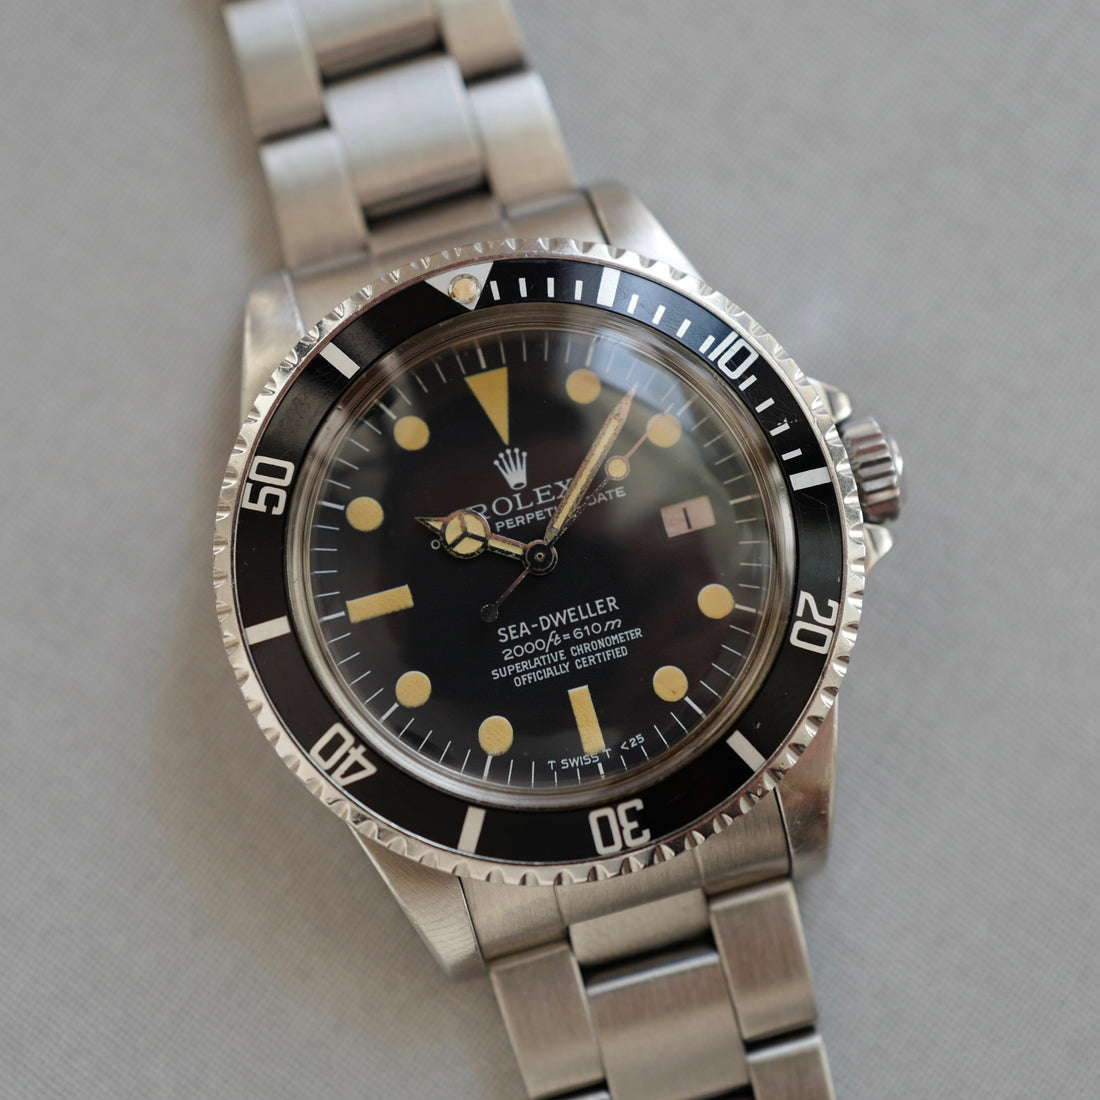 Rolex Sea-Dweller Rail Dial Watch Ref. 1665, from 1979